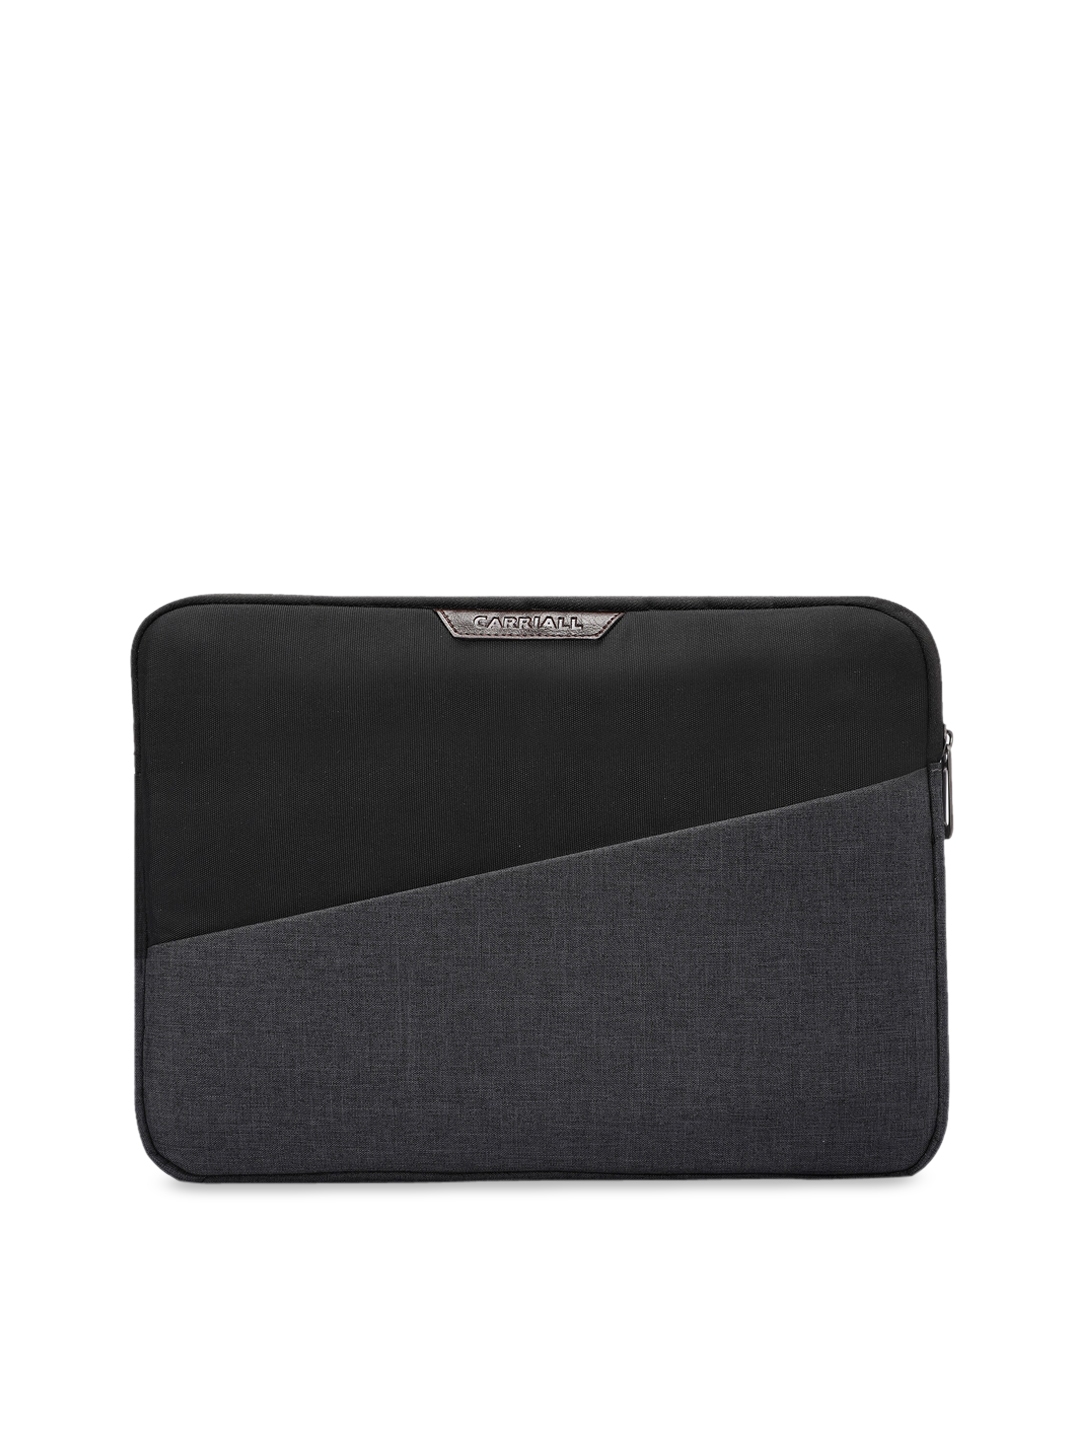 CARRIALL Unisex Black   Grey Colourblocked 15 Inch Laptop Sleeve